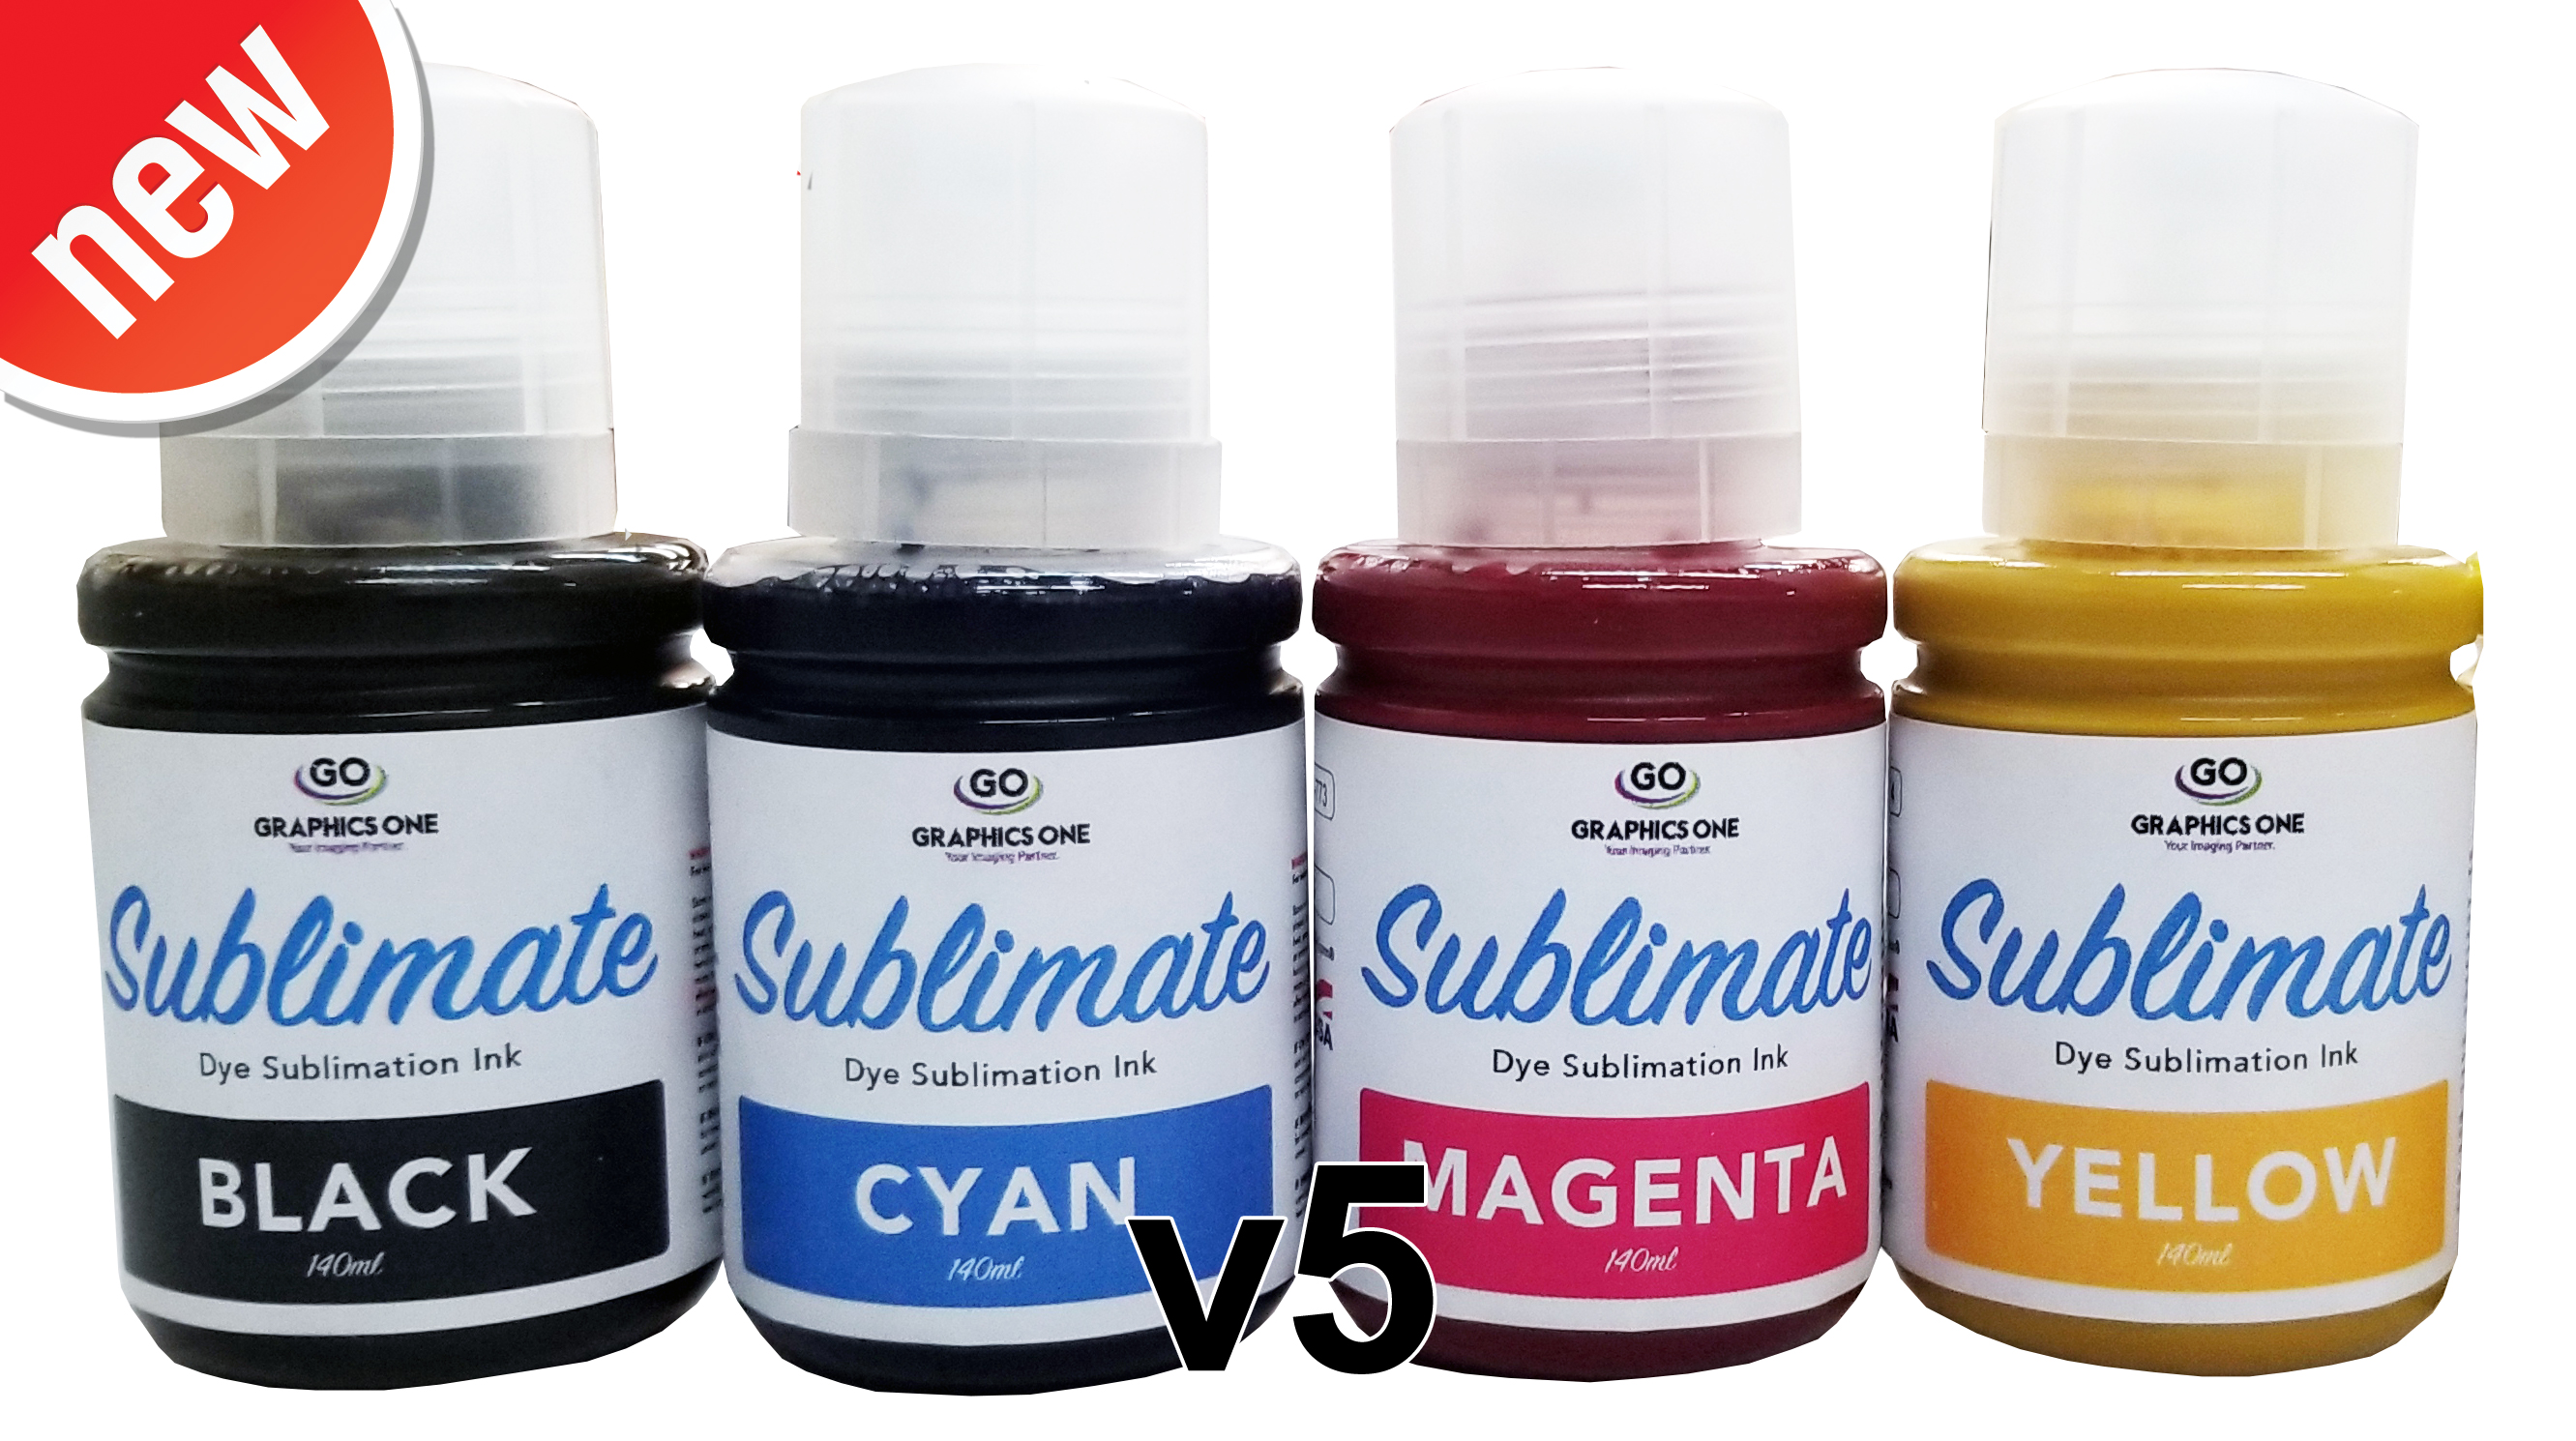 GO Sublimate Dye Sublimation Ink 140mL - New Version